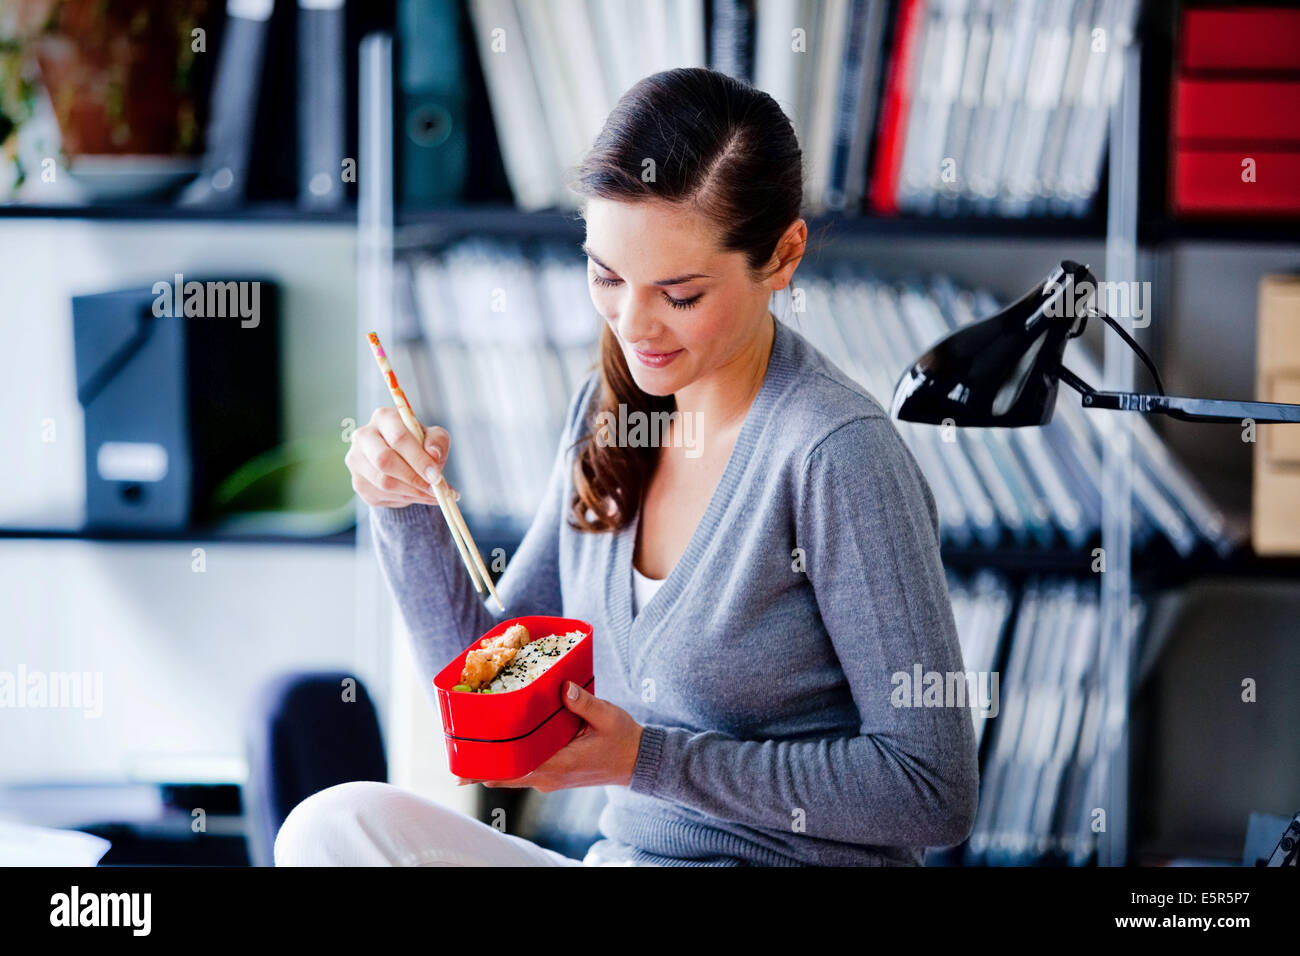 Woman eating bento. Stock Photo